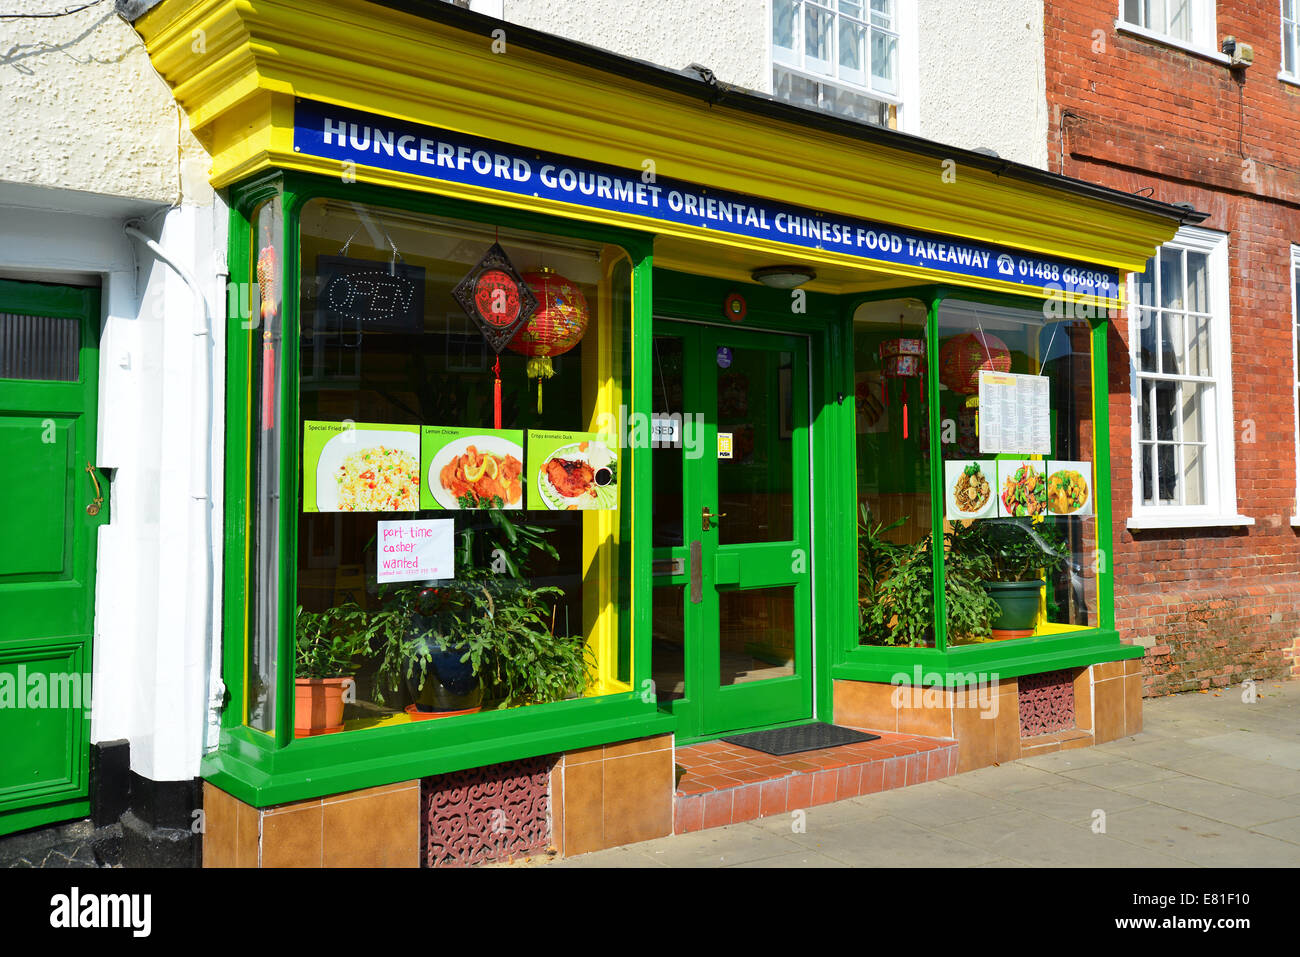 Cuisine chinoise Oriental gastronomique restaurant à emporter, High Street, Hungerford, Berkshire, Angleterre, Royaume-Uni Banque D'Images